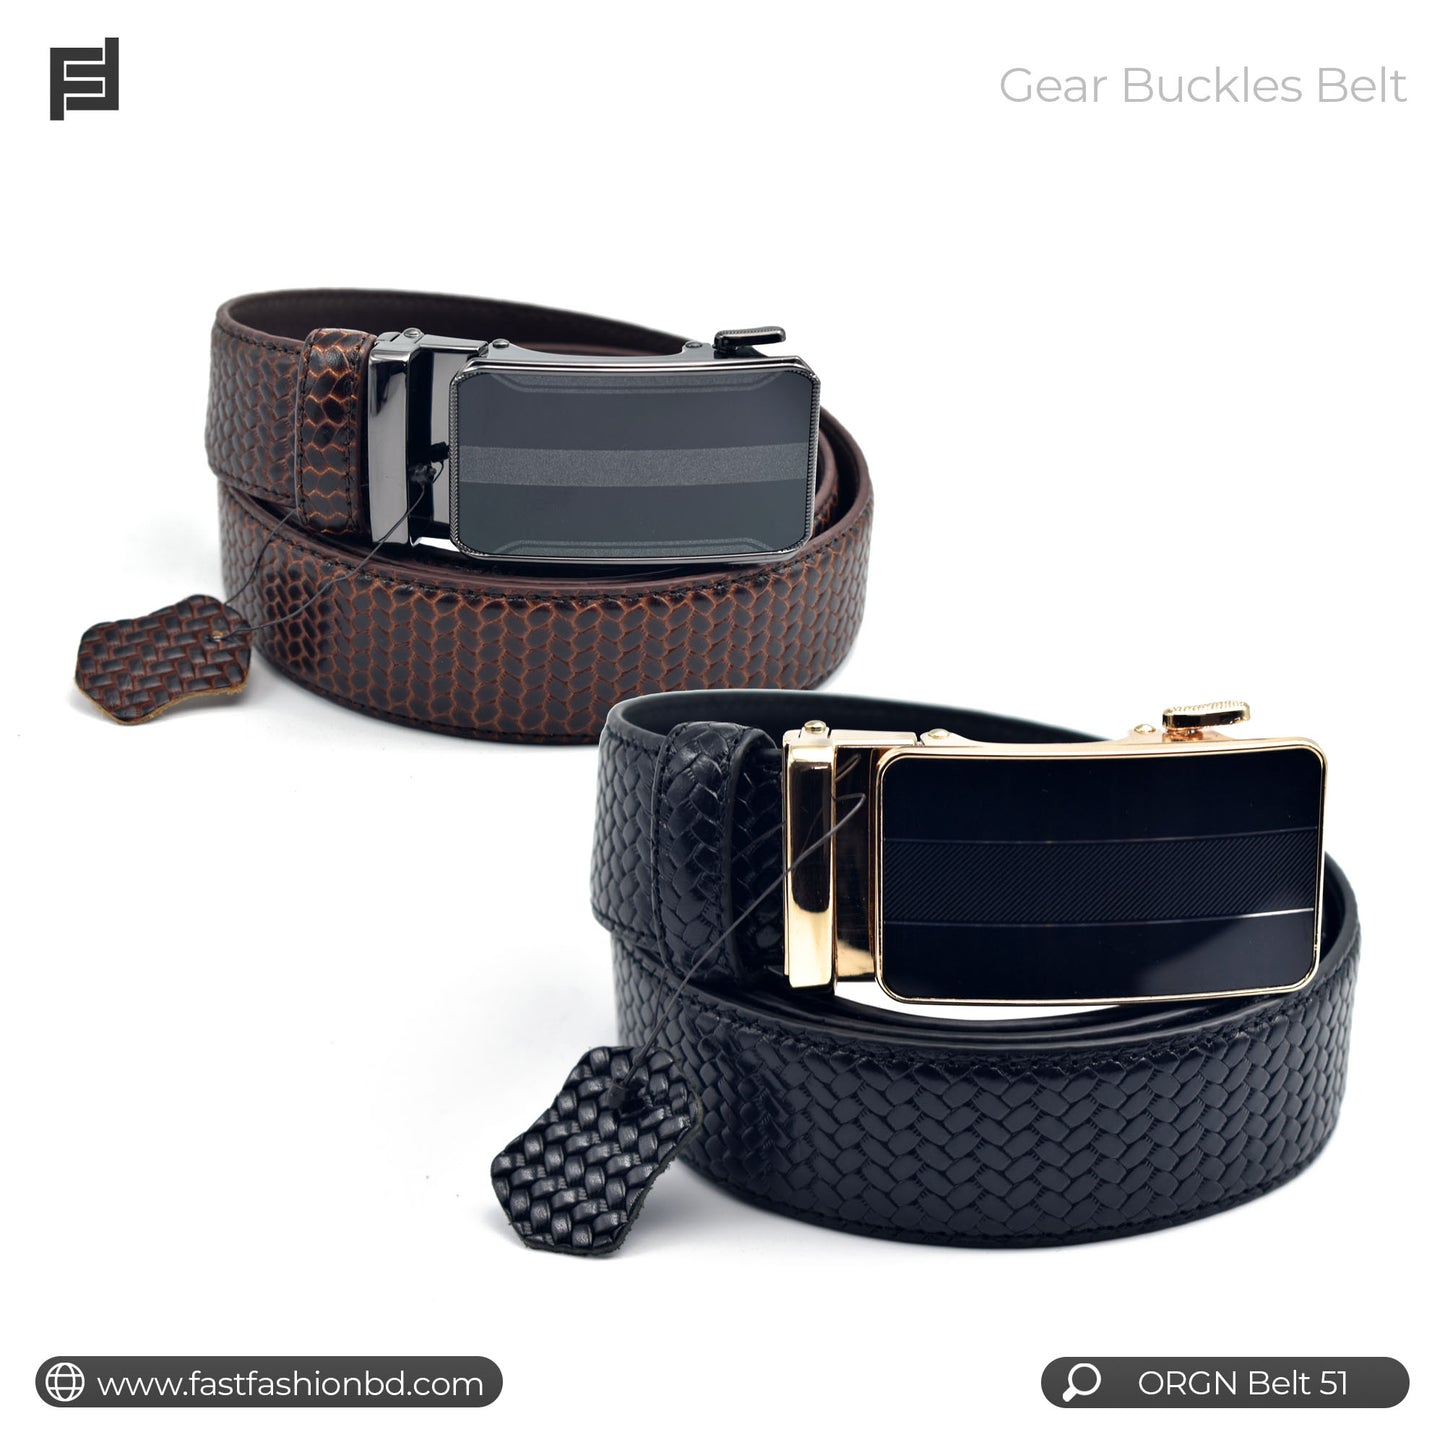 Premium Quality Original Leather Belt - ORGN Belt 51